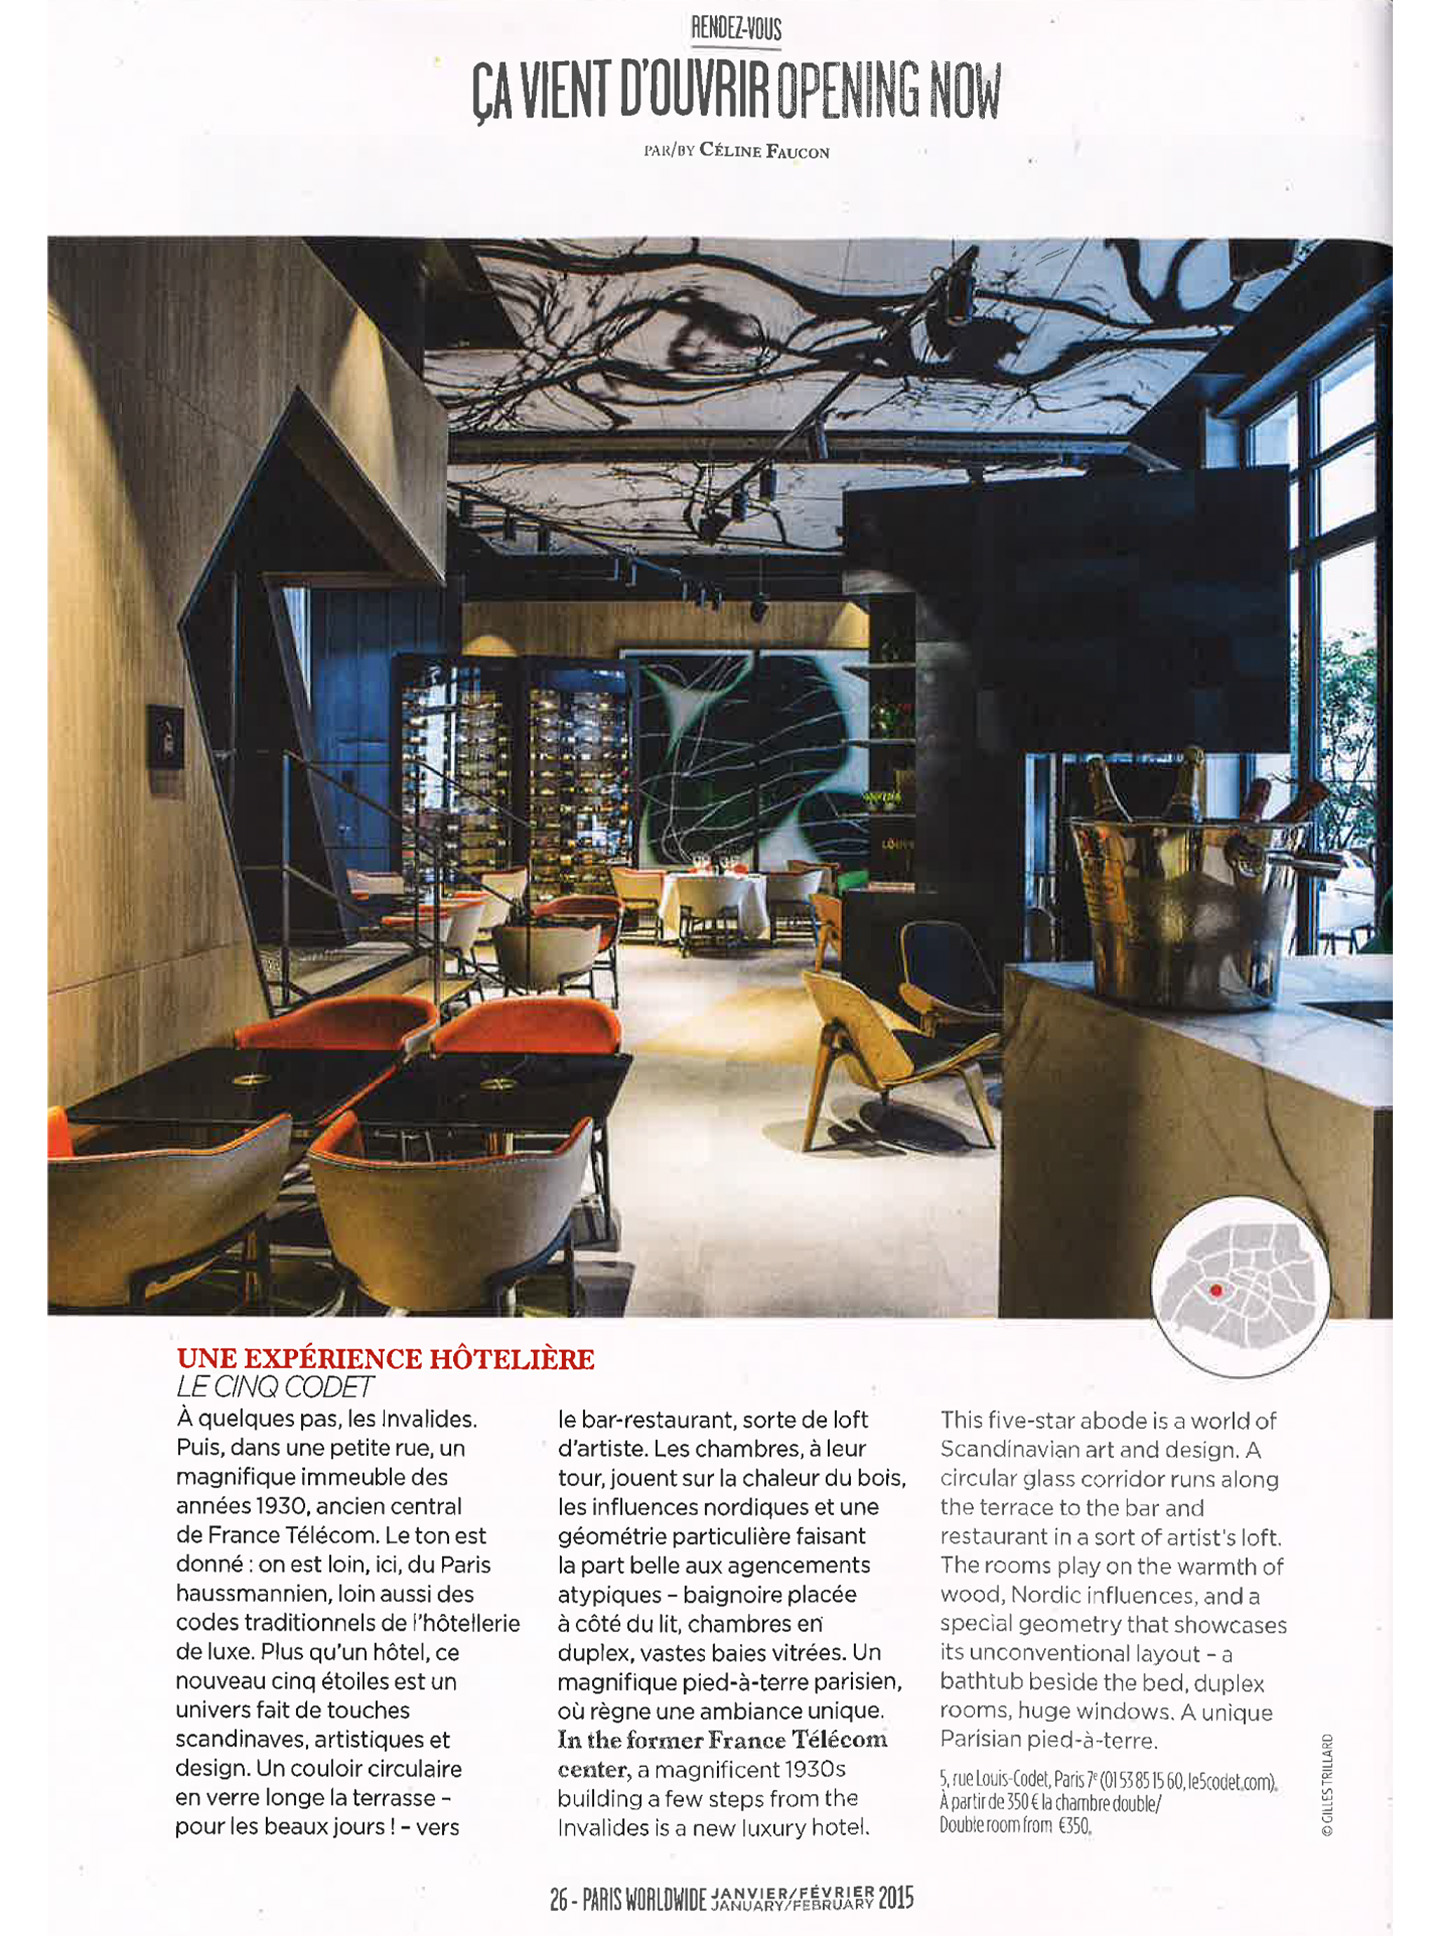 article on the cinq codet, a 5 star luxury hotel in paris designed by the interior design studio jean-philippe nuel